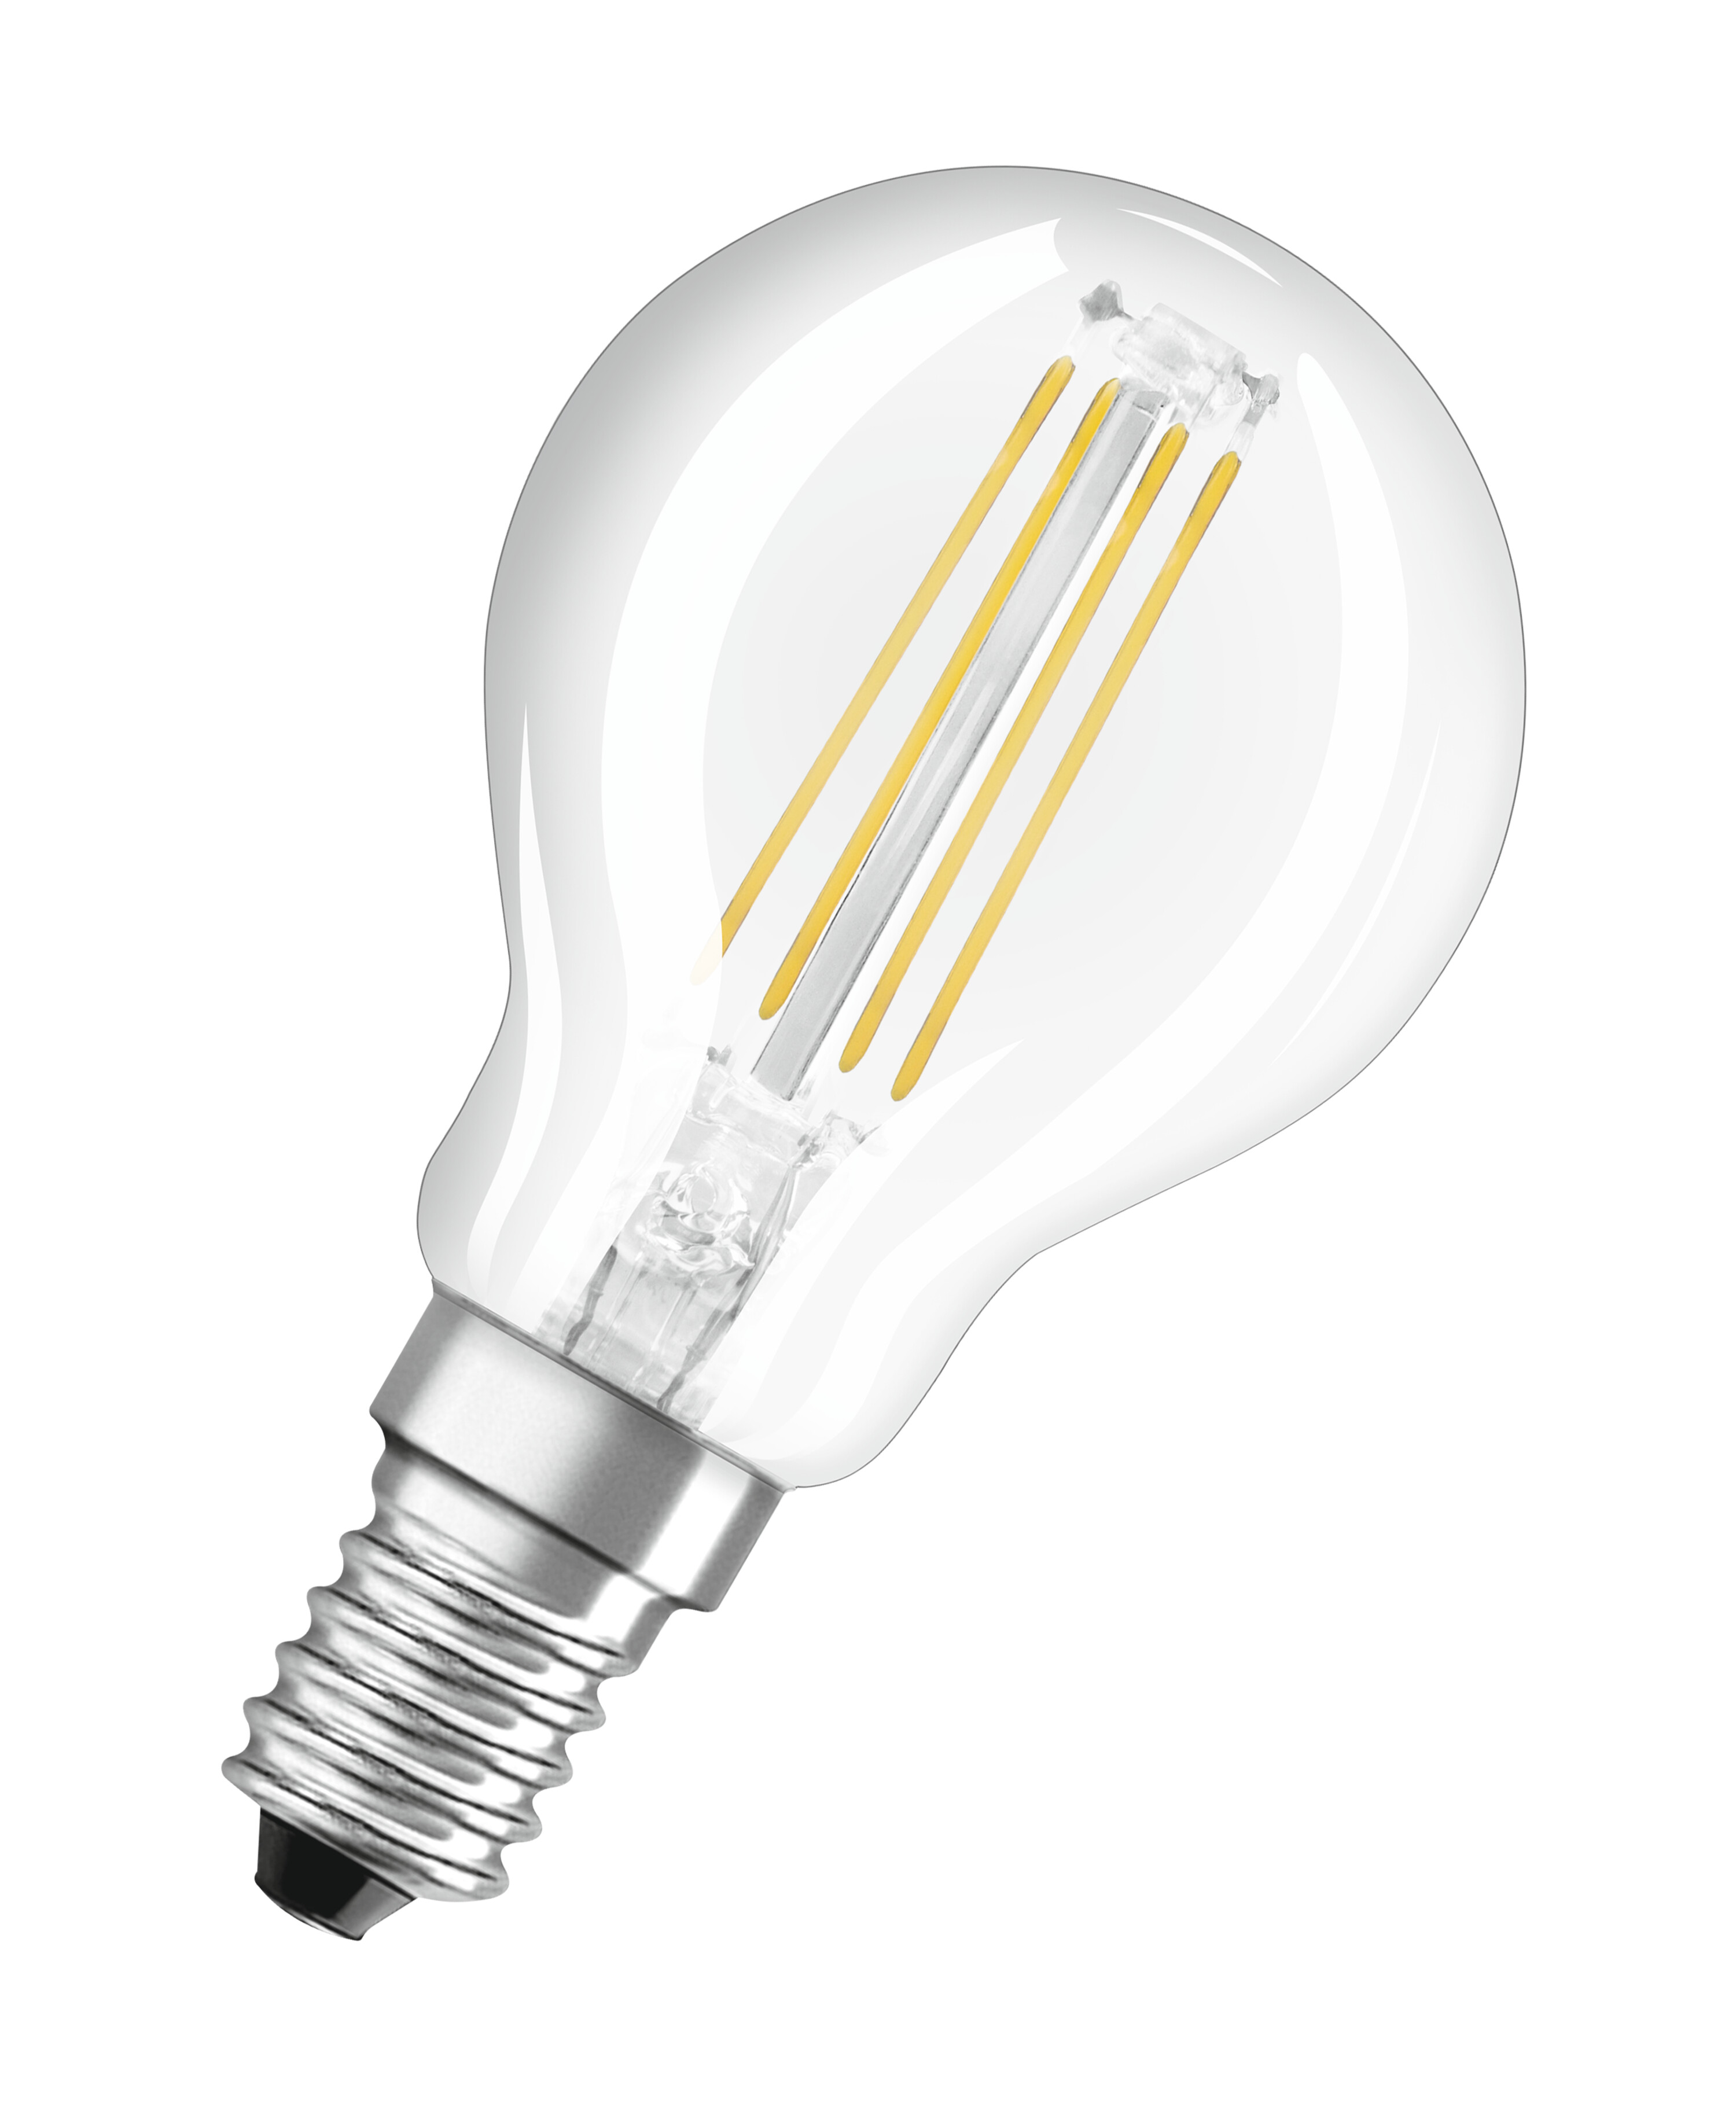 LED OSRAM  470 CLASSIC STEP Lampe P LED DIM Warmweiß THREE Lumen